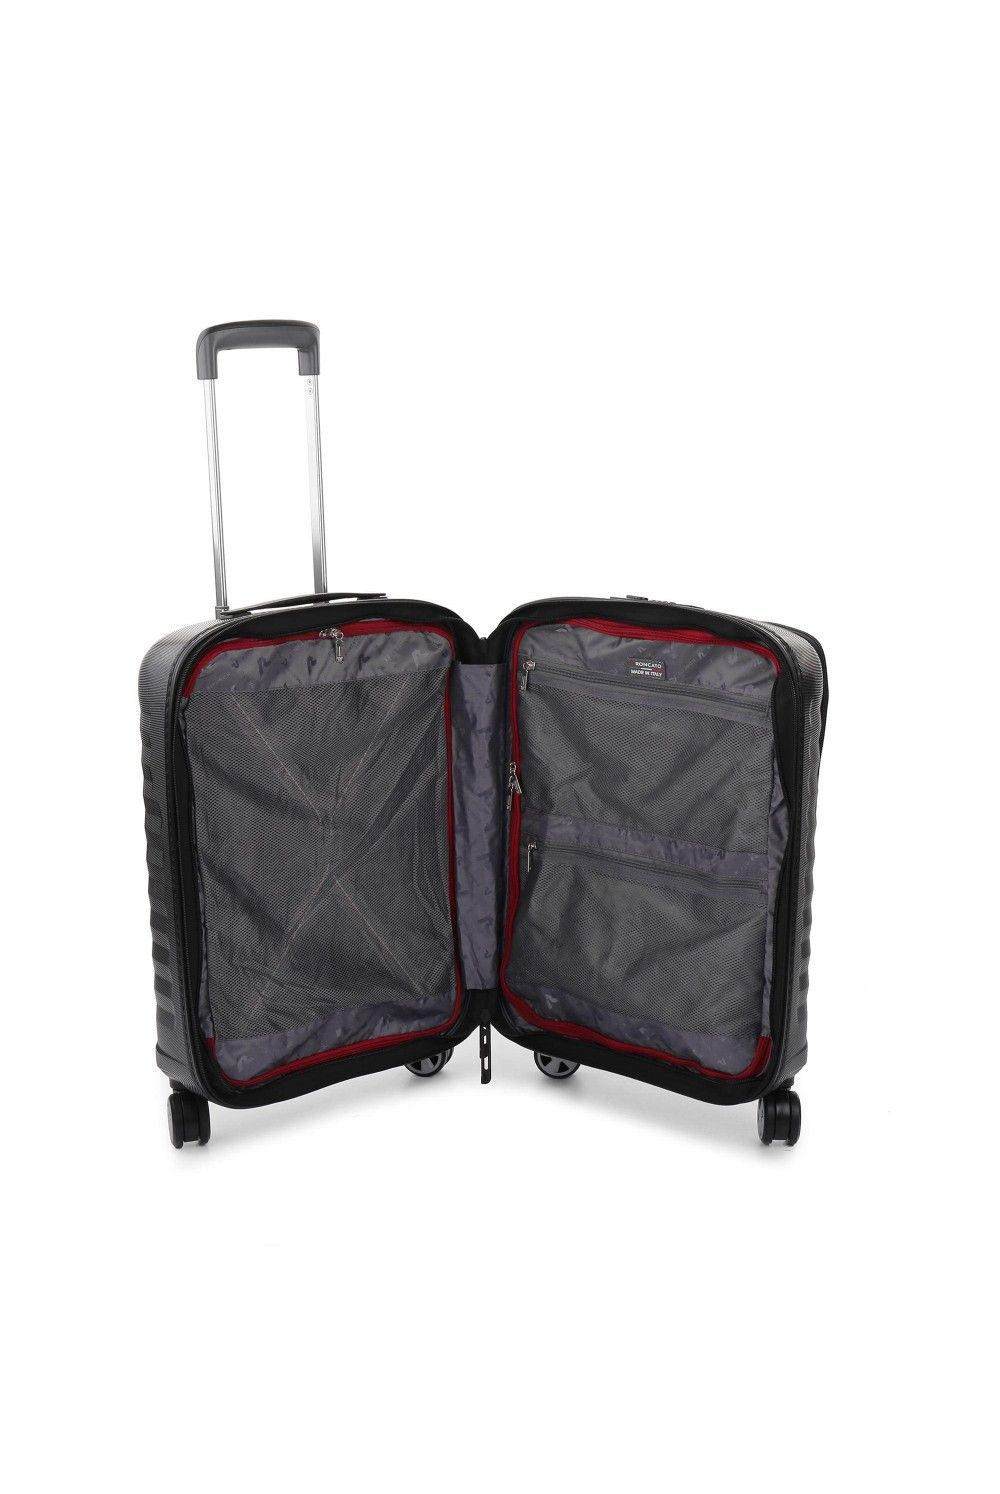 Roncato hand luggage D-Premium 55x40x20/23 expandable anthracite